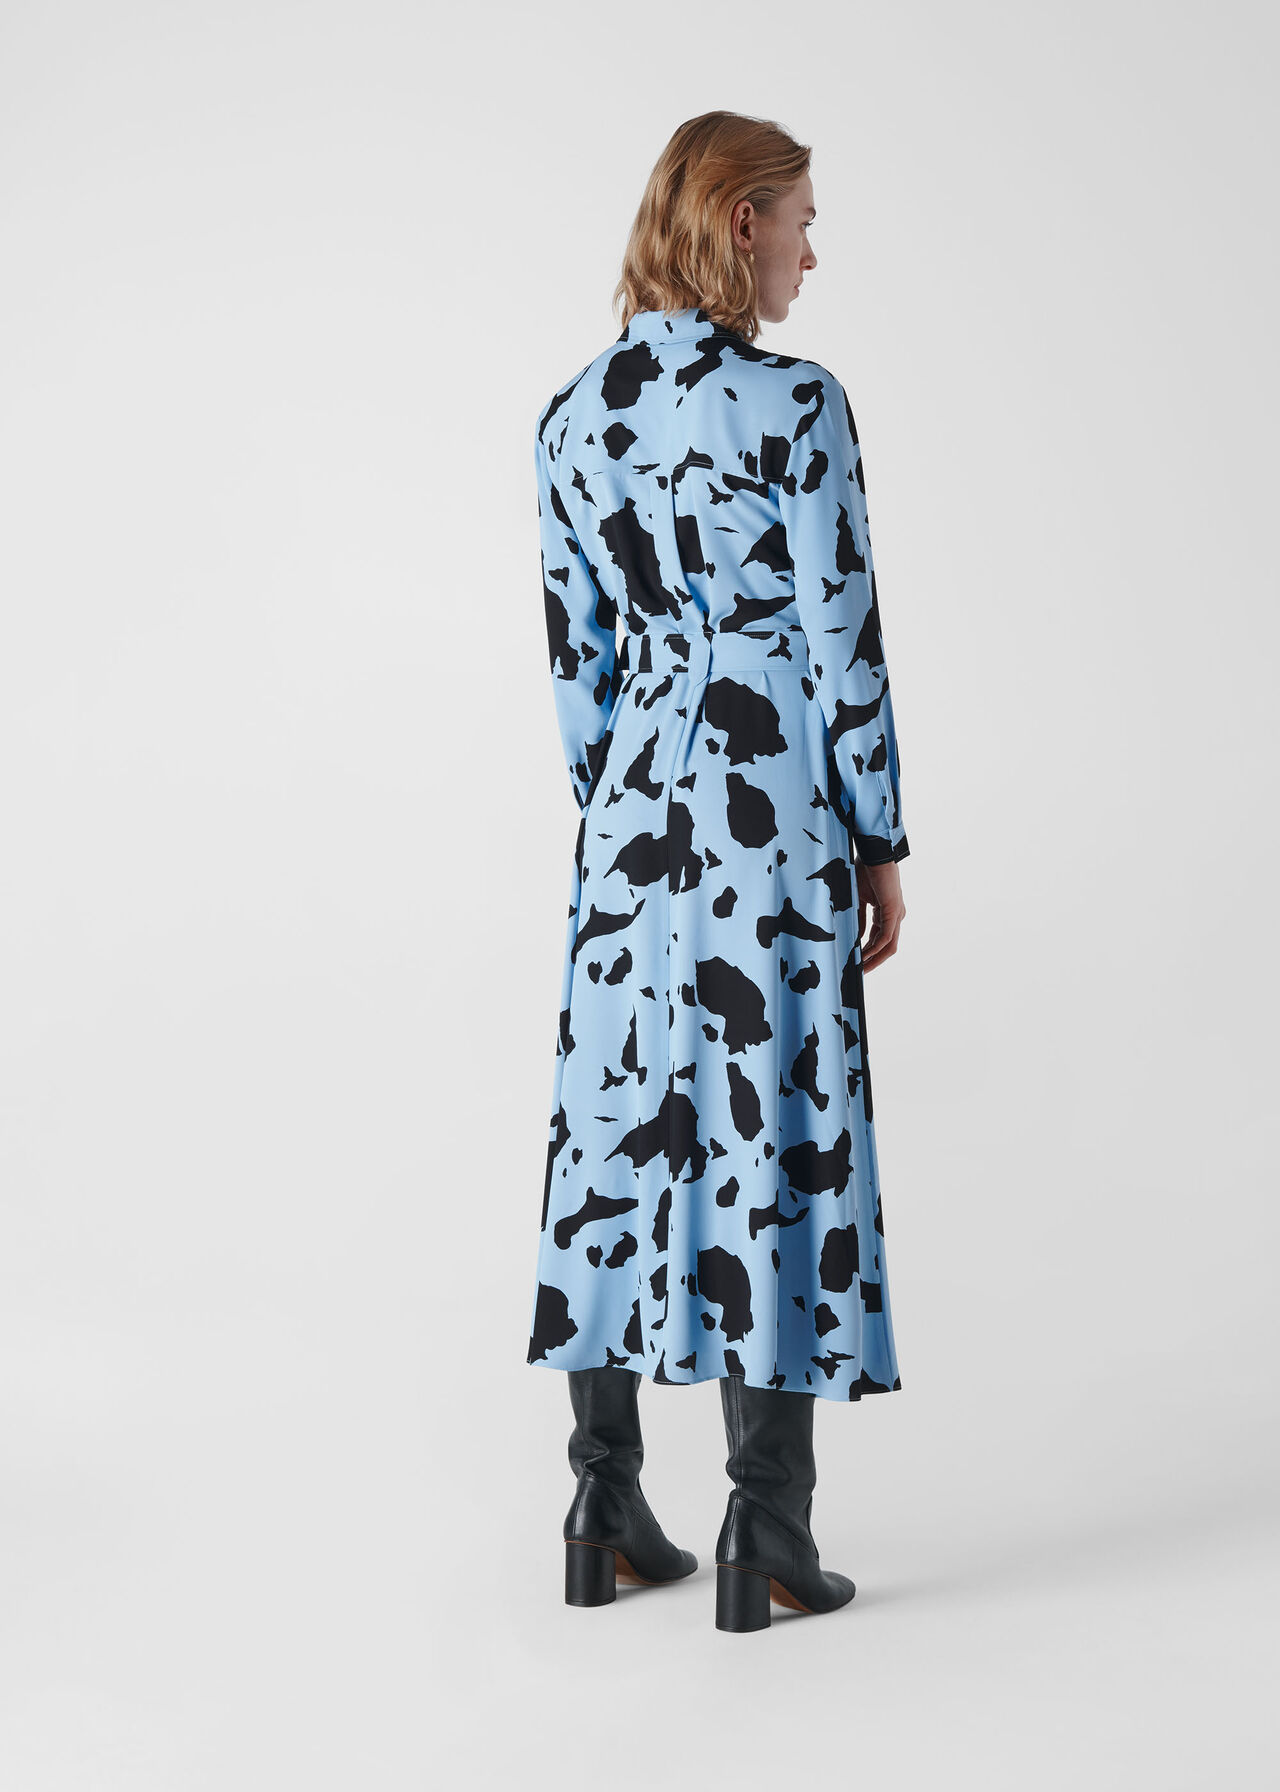 Cow Print Military Dress Blue/Multi